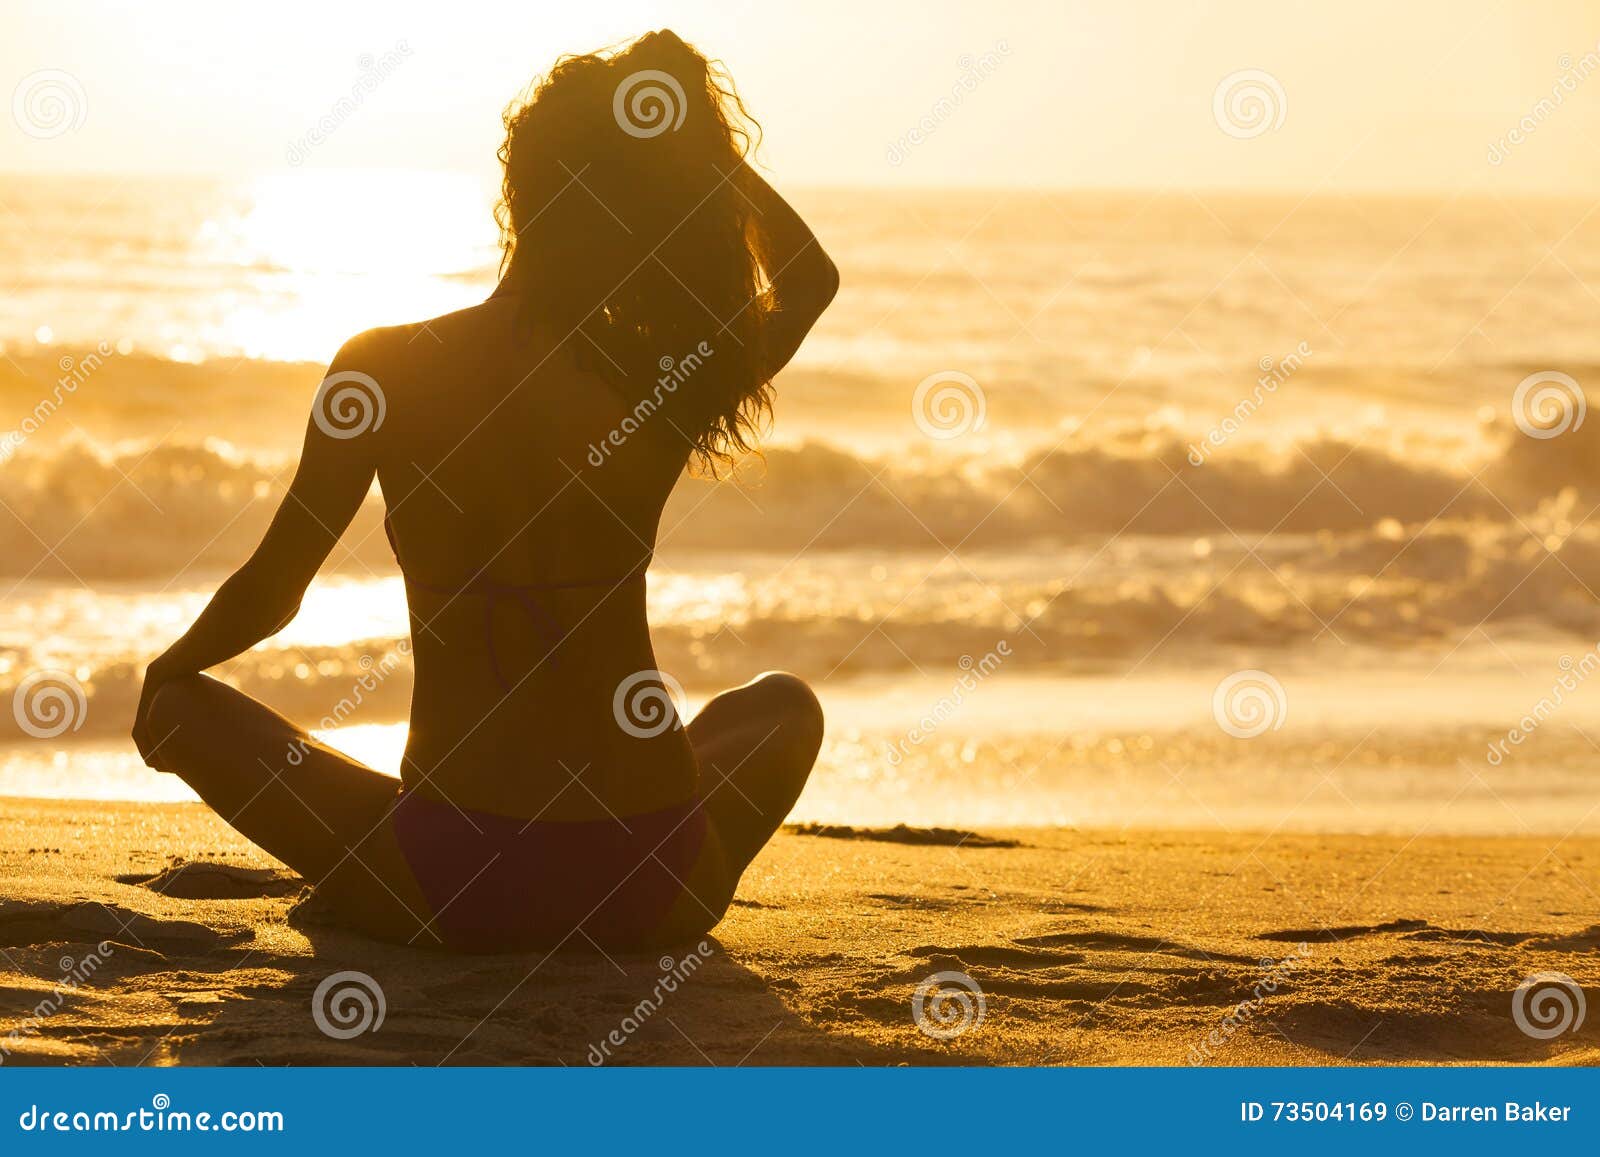 70,501 Sunrise Beach Woman Stock Photos - Free & Royalty-Free